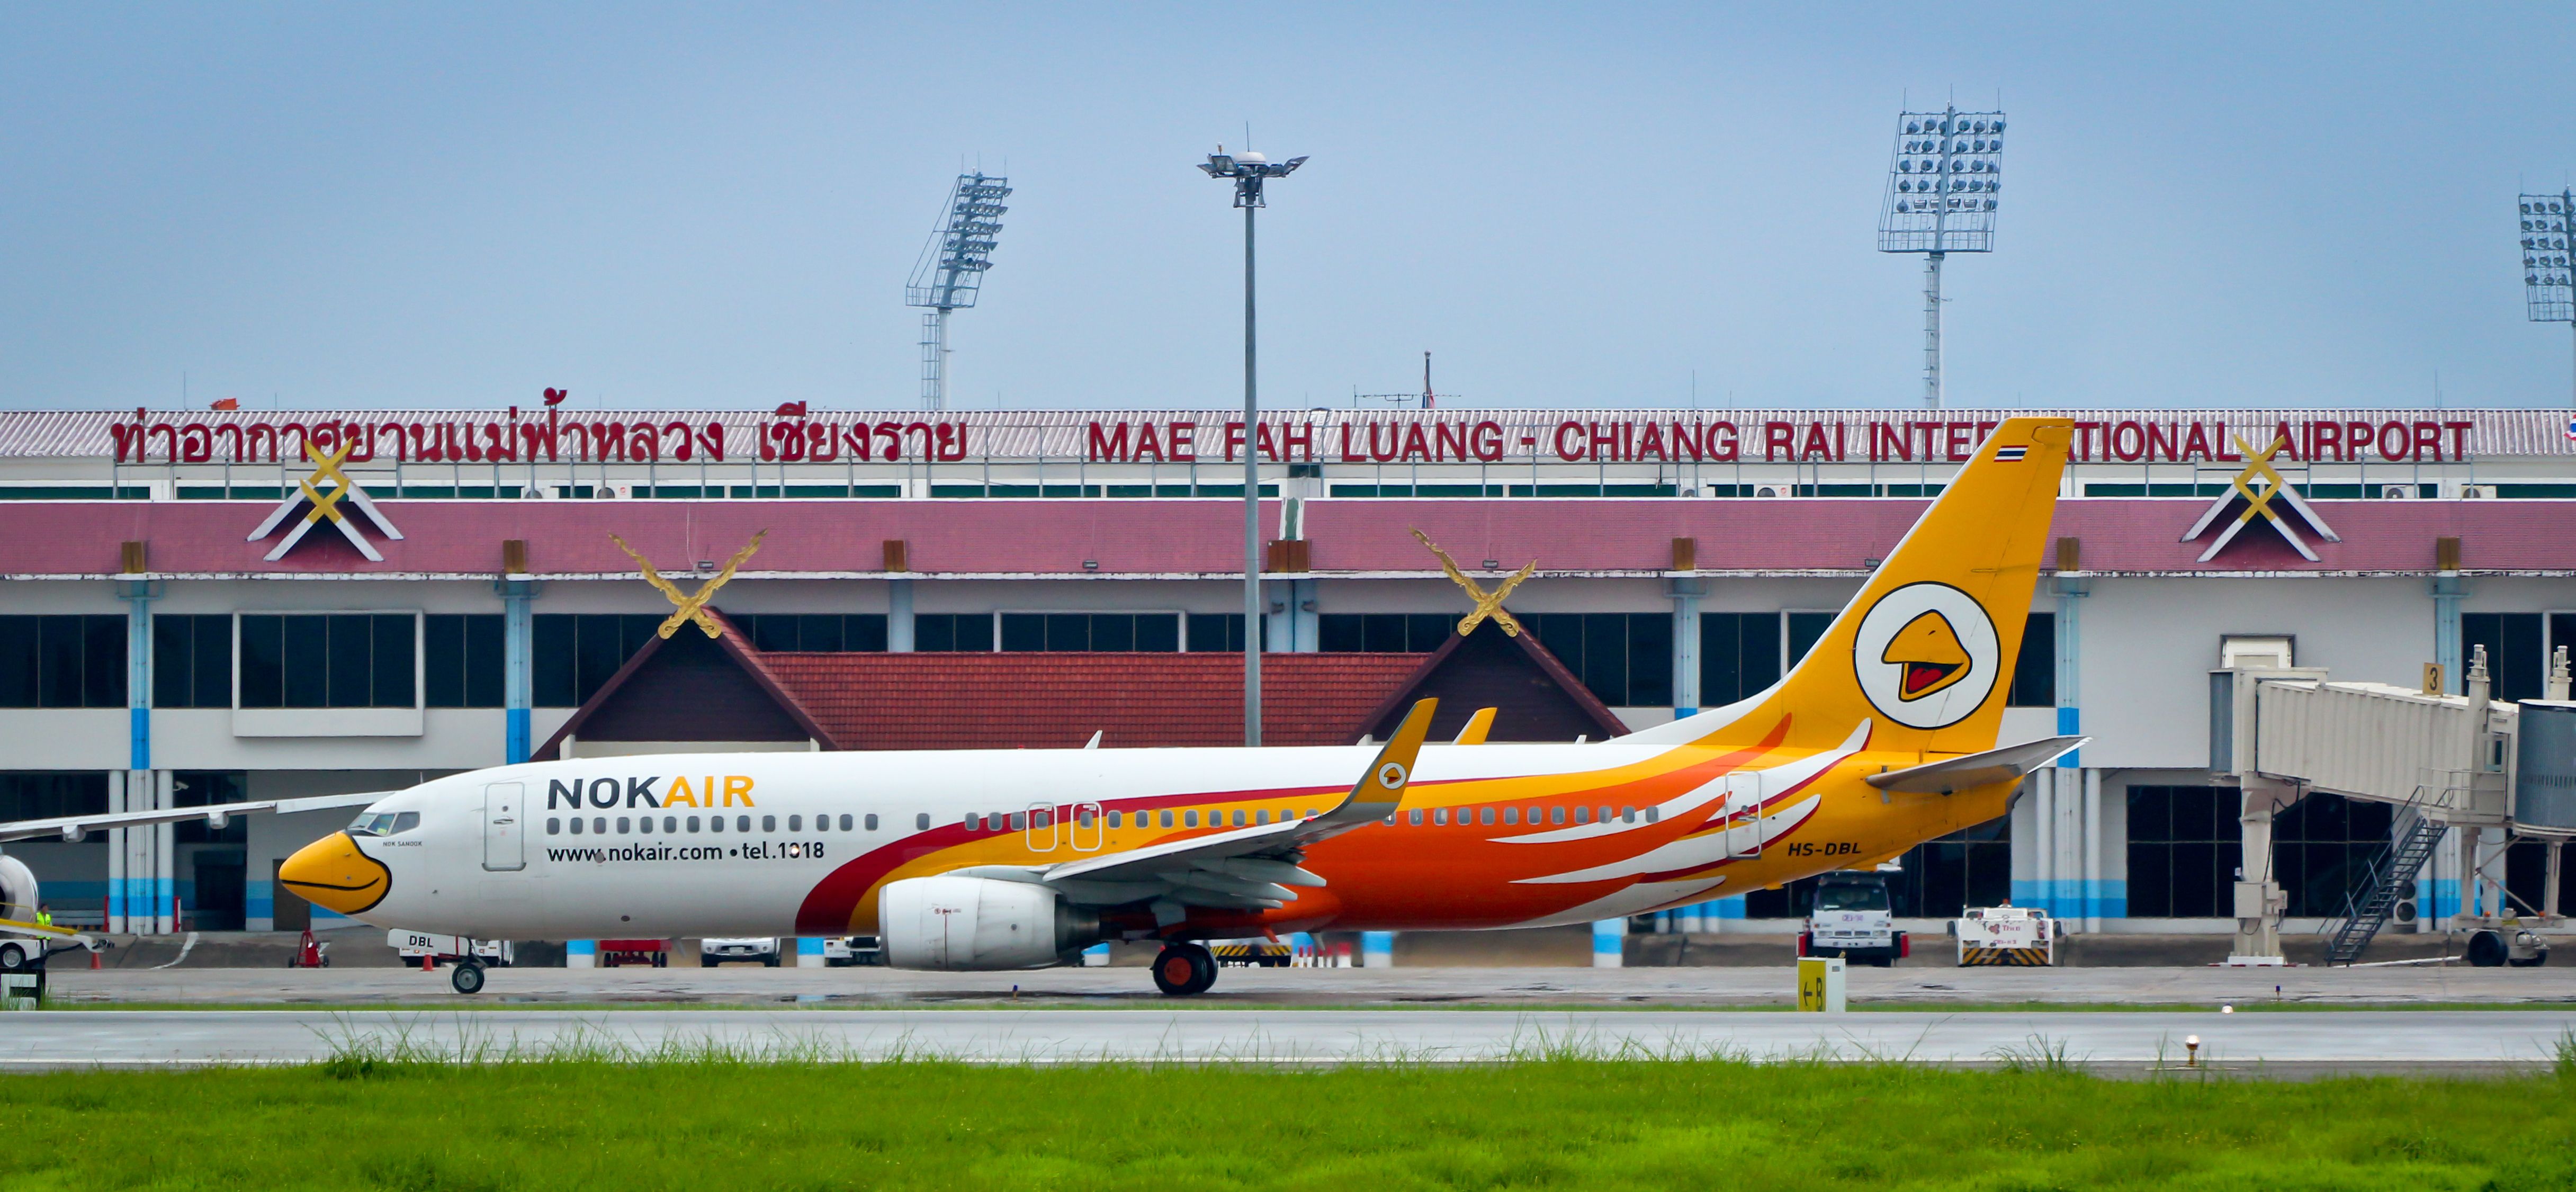 mae fah luang chiang rai airport with nok air taxiing